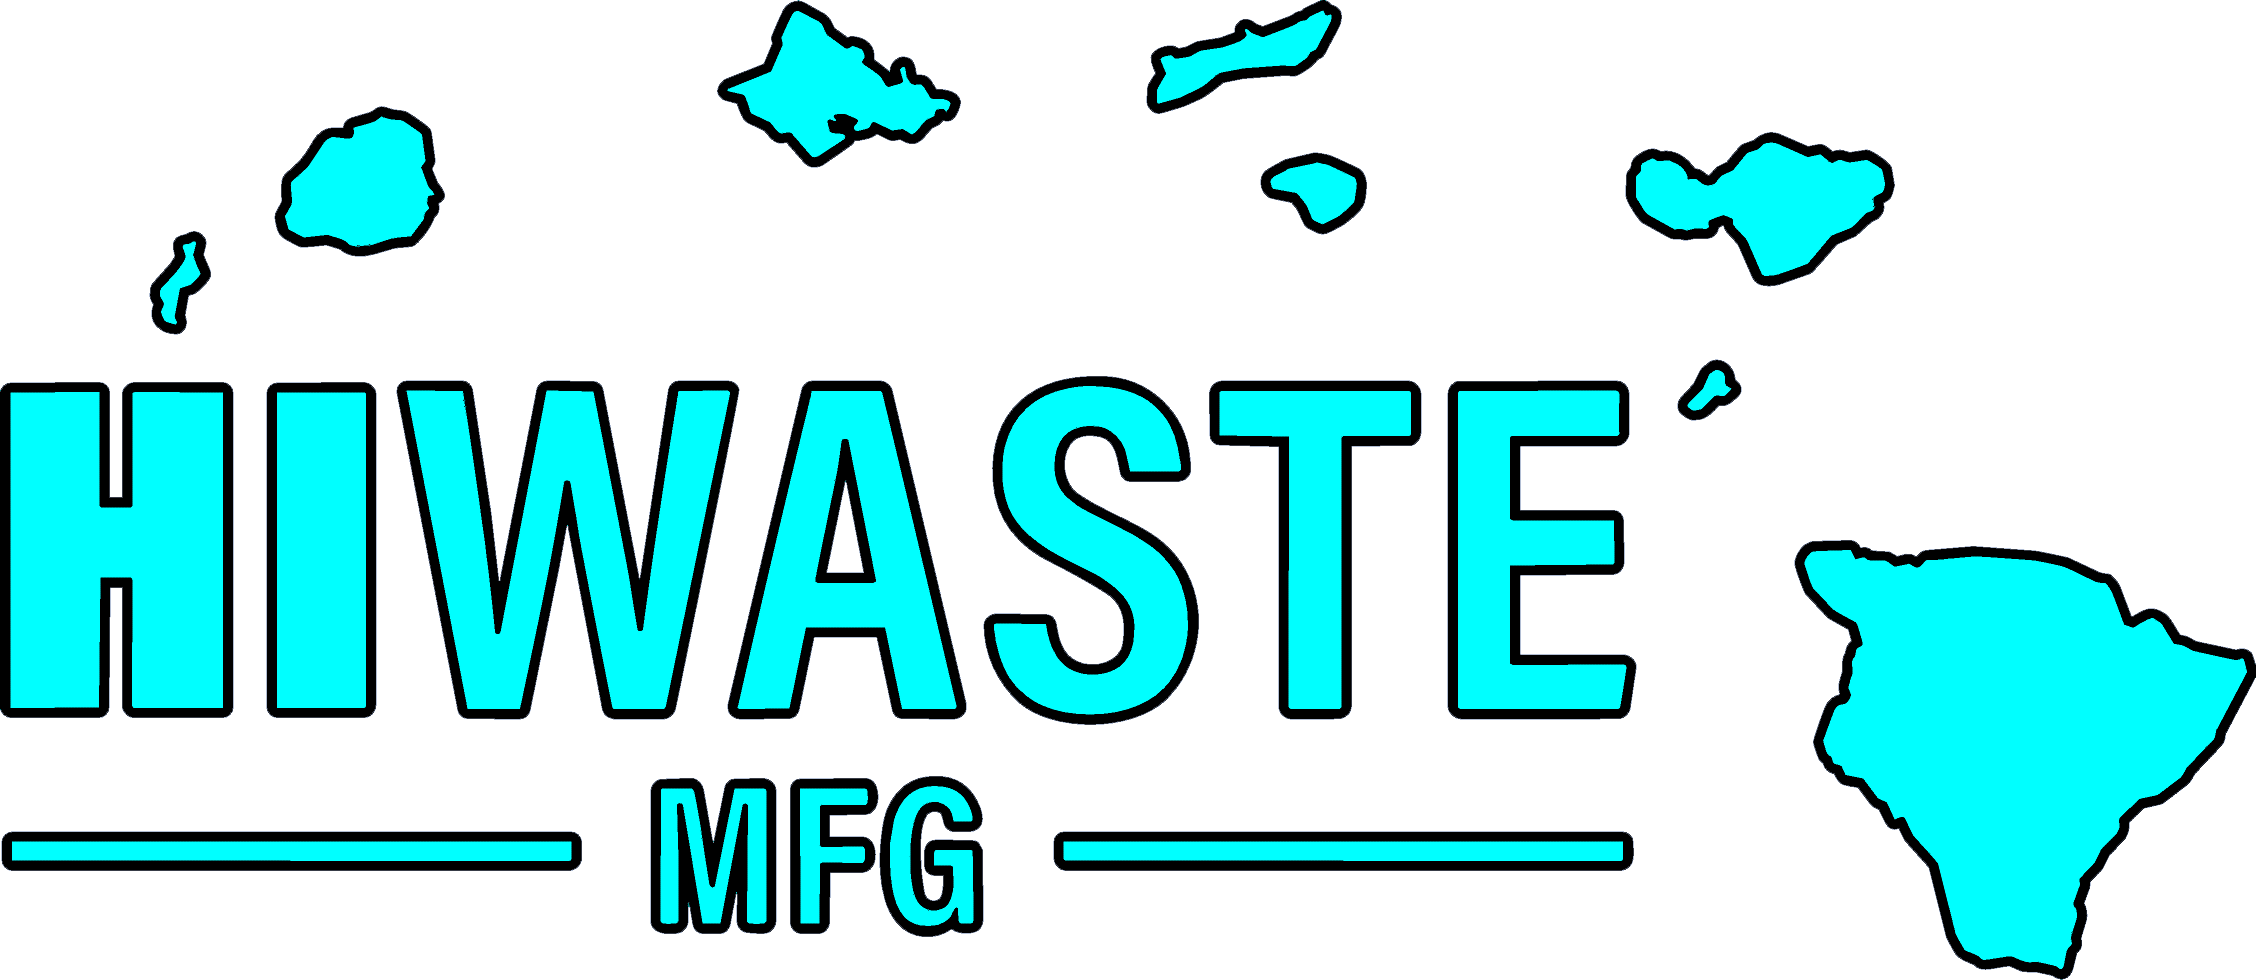 HIWASTE MFG Logo